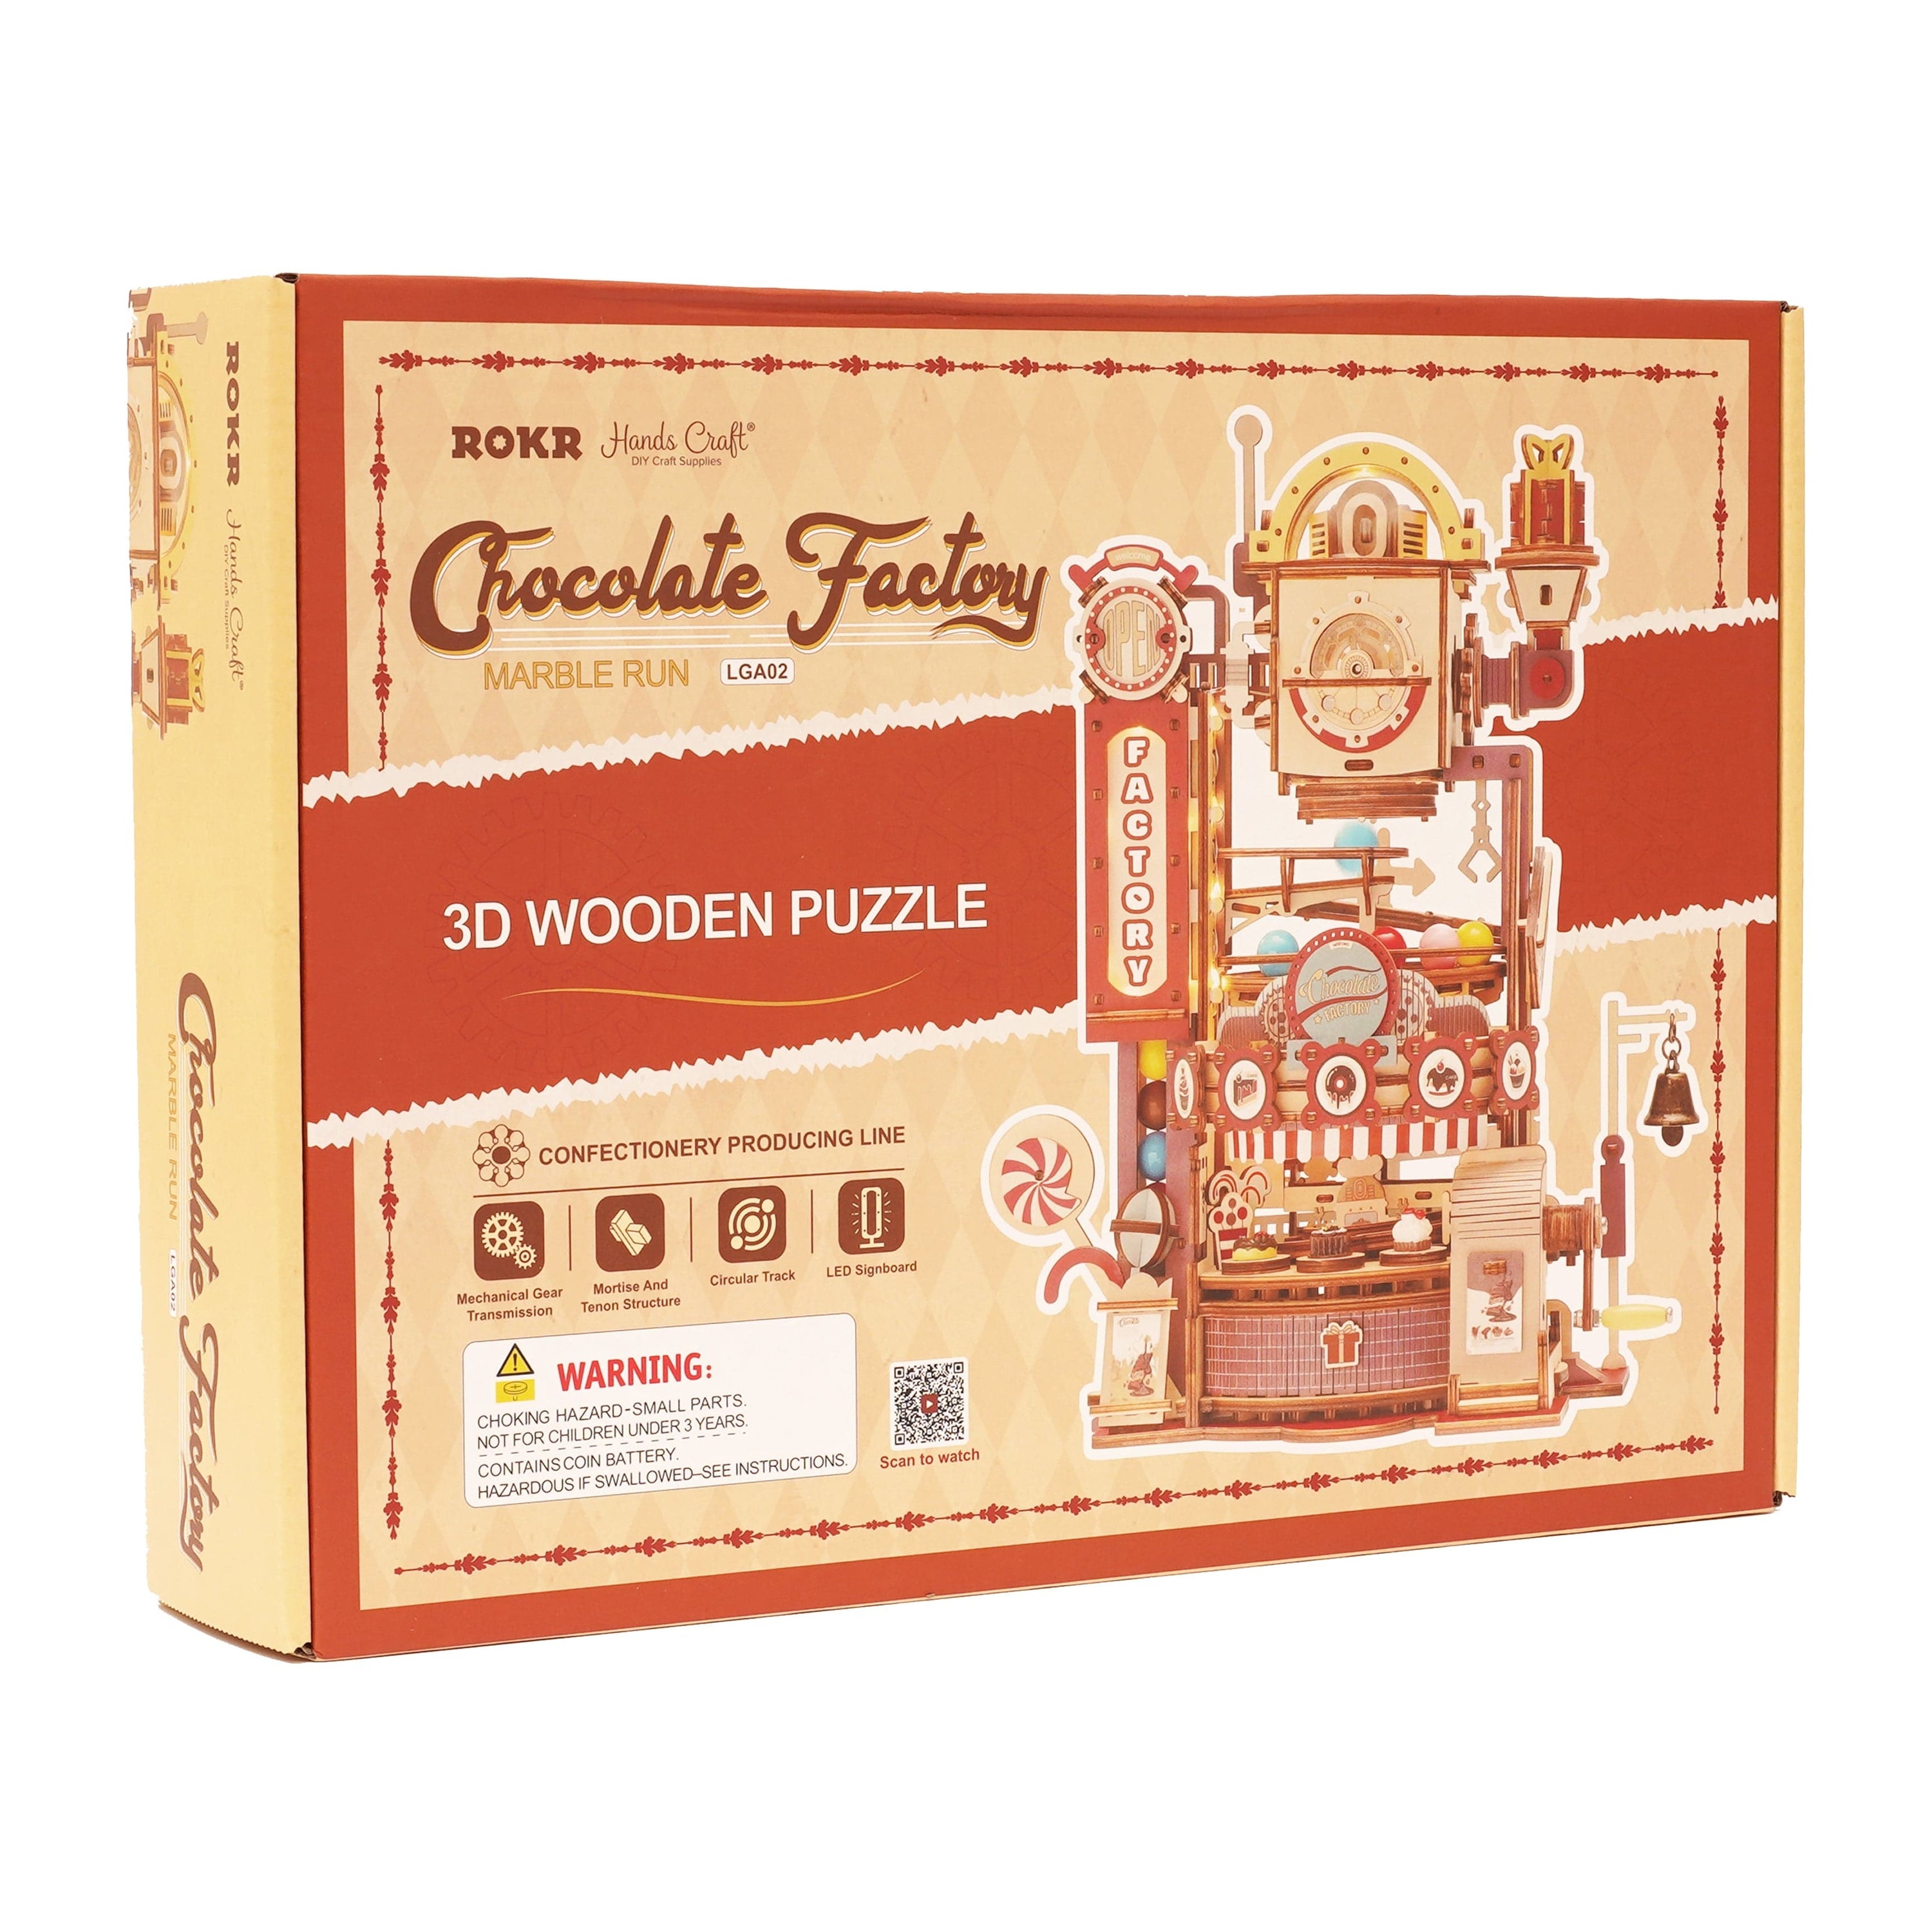 Hands Craft DIY Marble Run: Chocolate Factory Kawaii Gifts